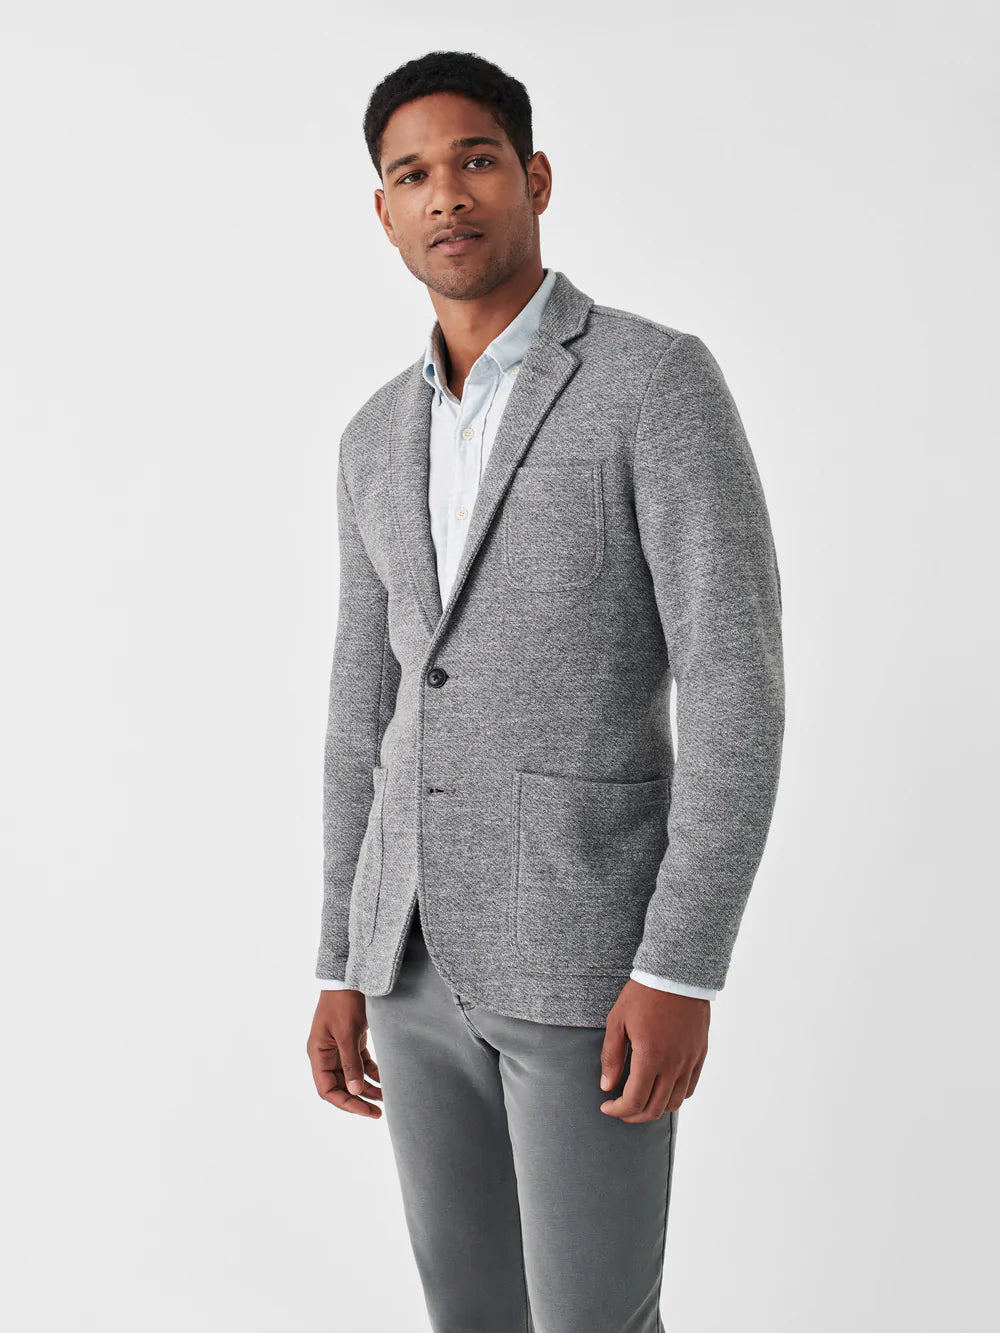 Grey on grey  Wool blazer mens, Blazer outfits men, Mens fashion